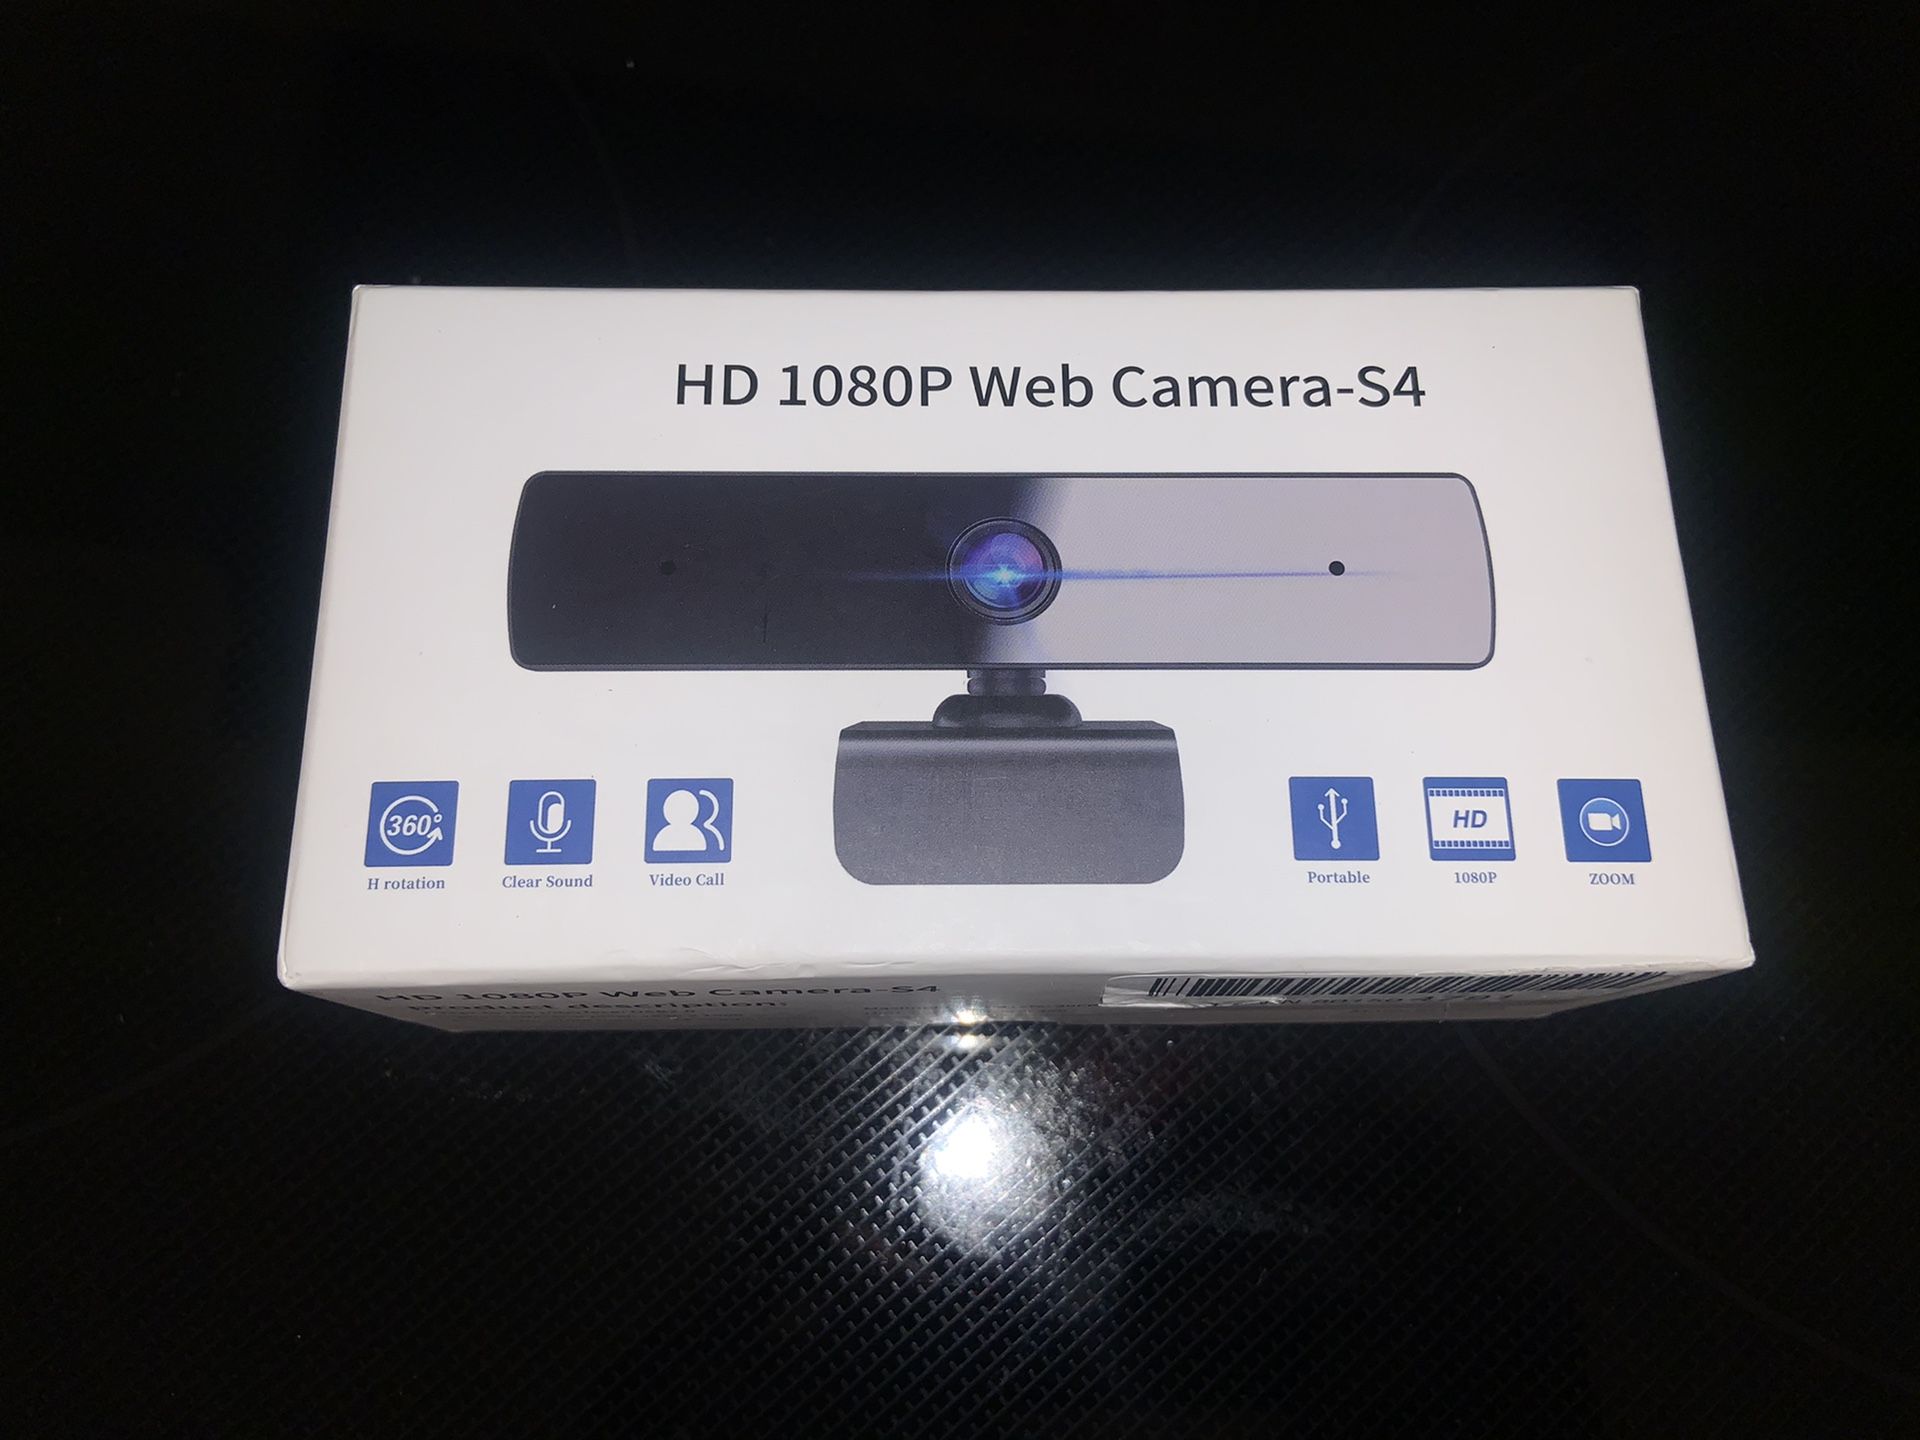 HD 1080p web camera